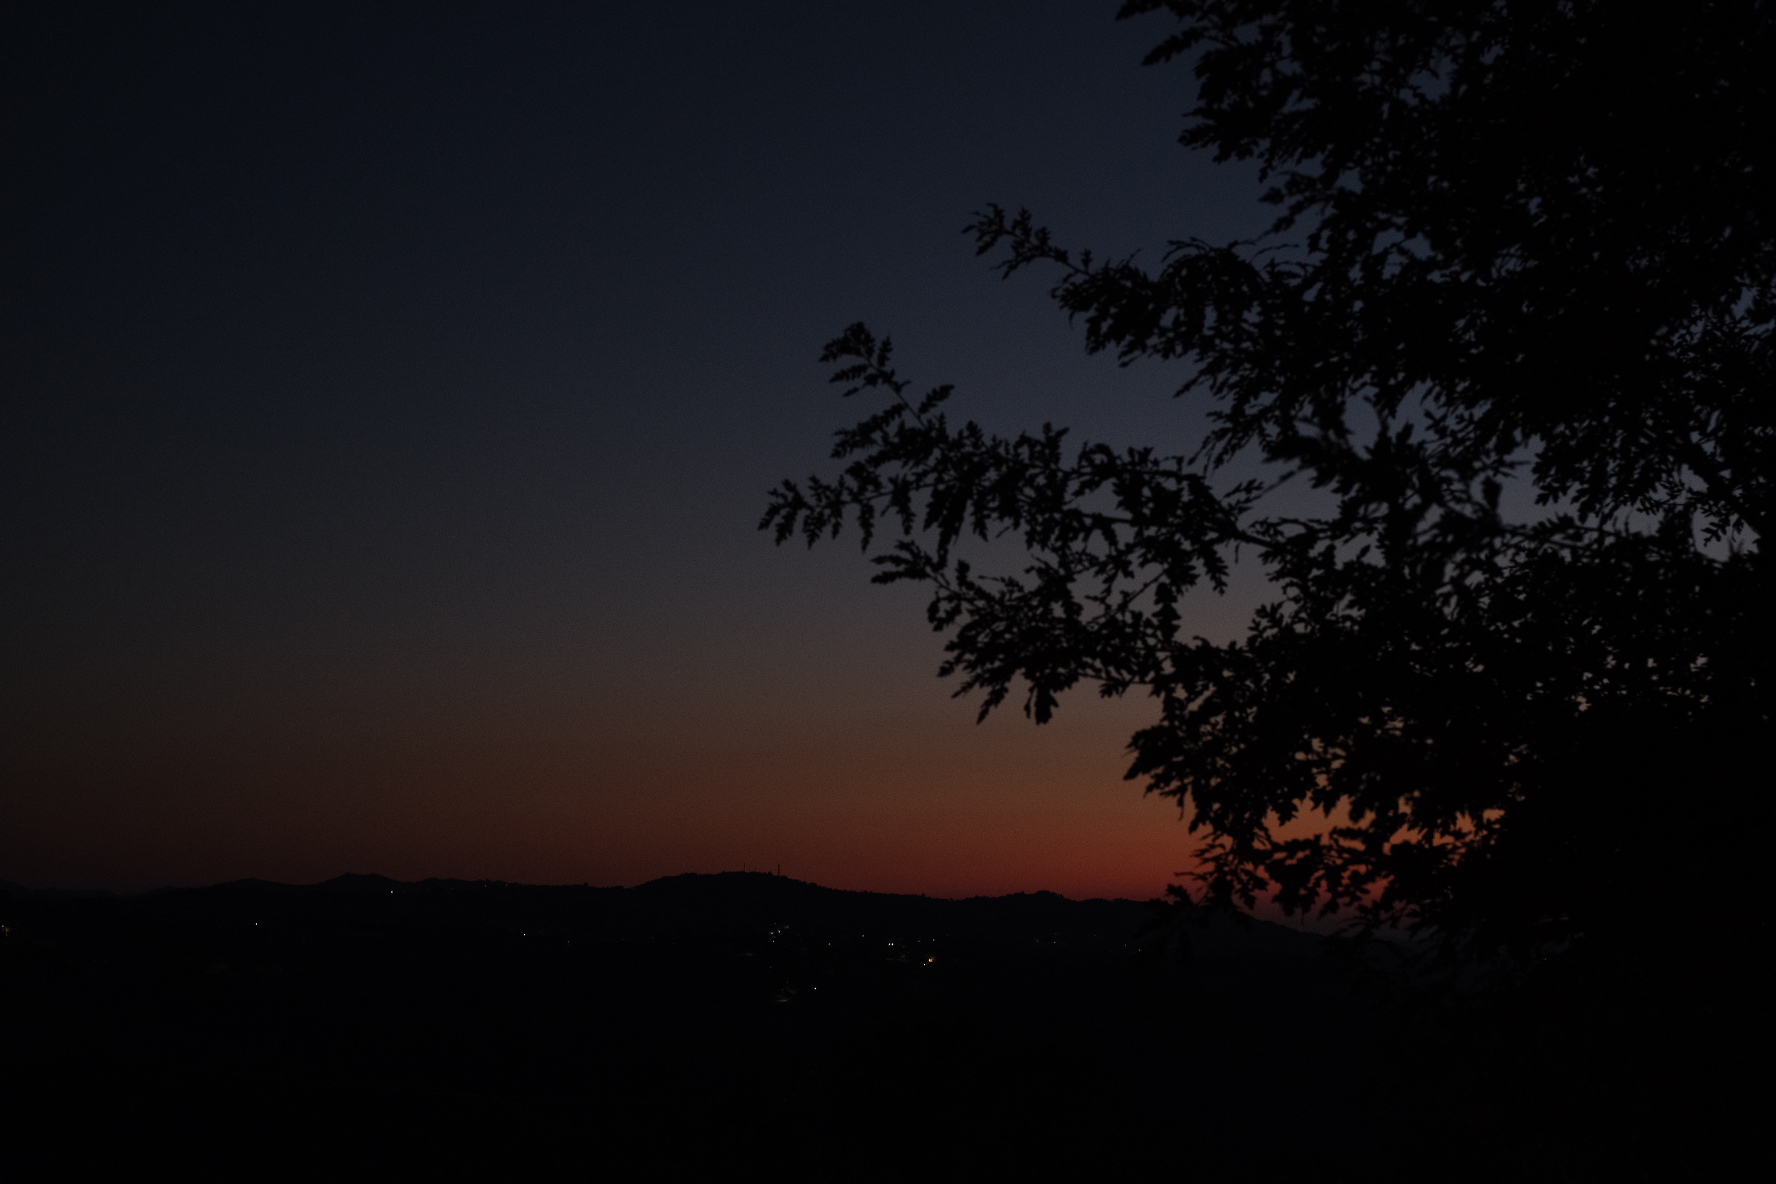 Sunrise on the Teramo hills...